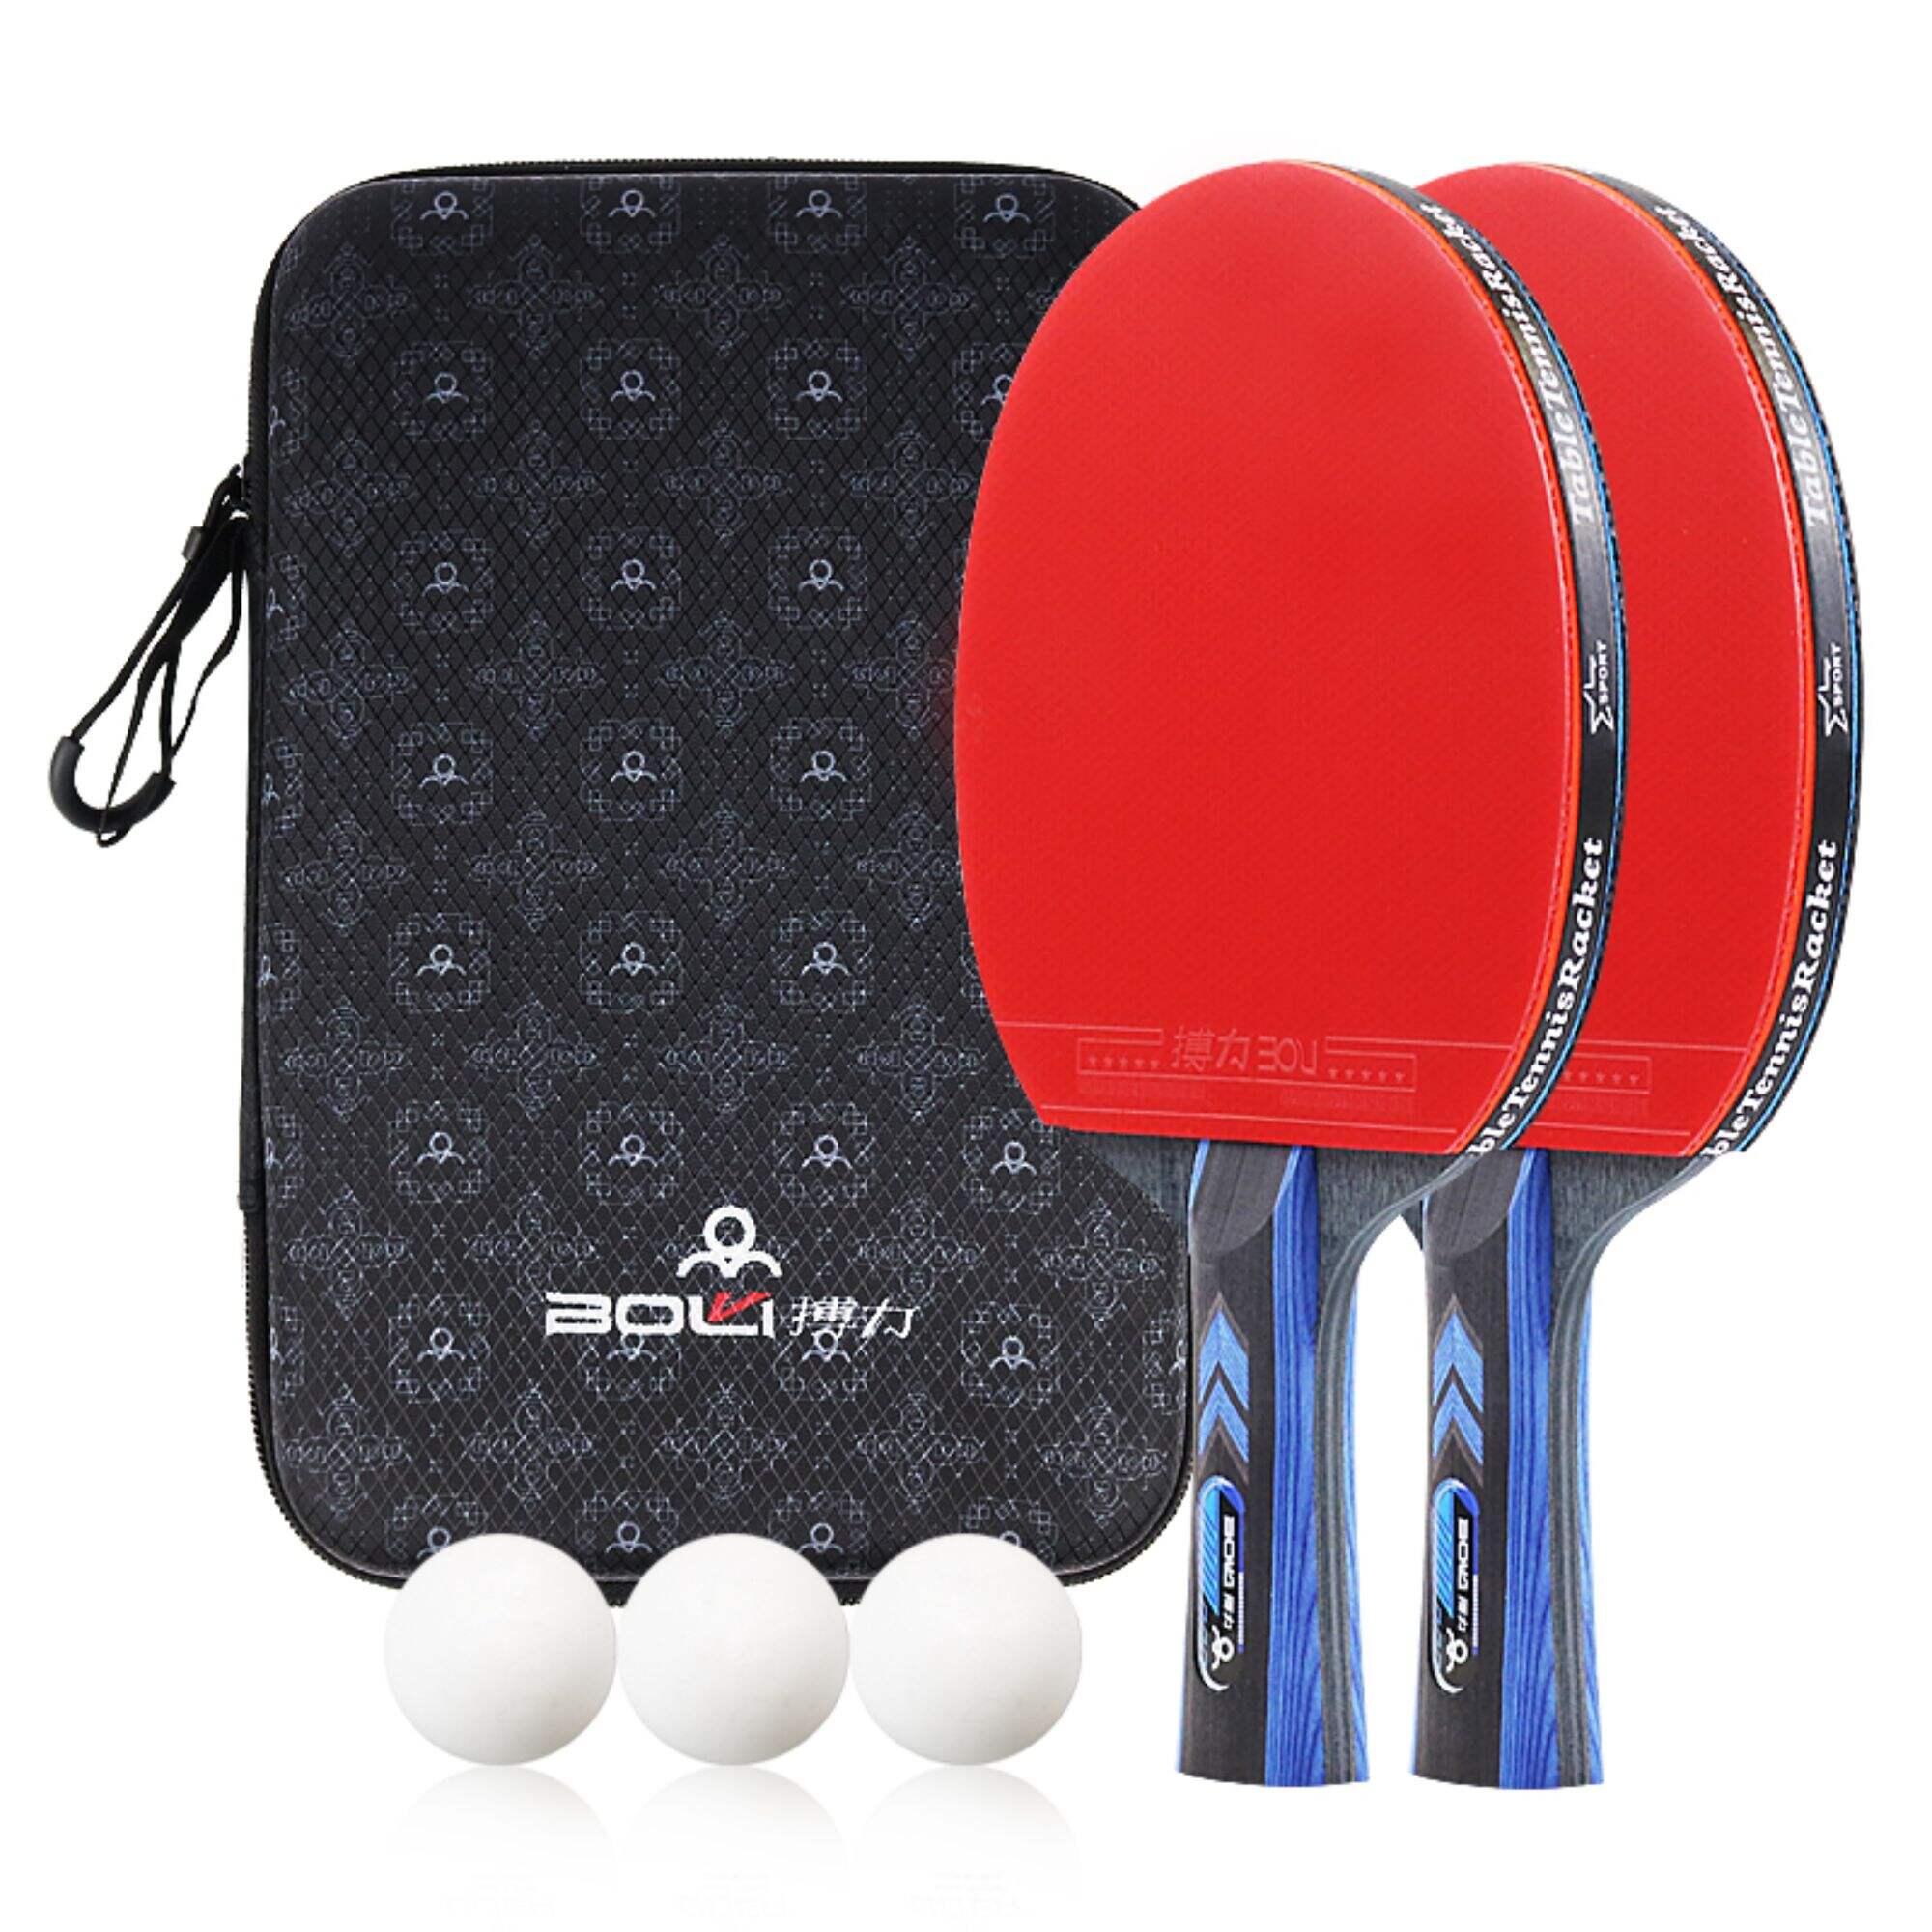 F02 Portable Table Tennis Set 2 Racket 3 Ball Professional Table Tennis Racket With Hard Bag